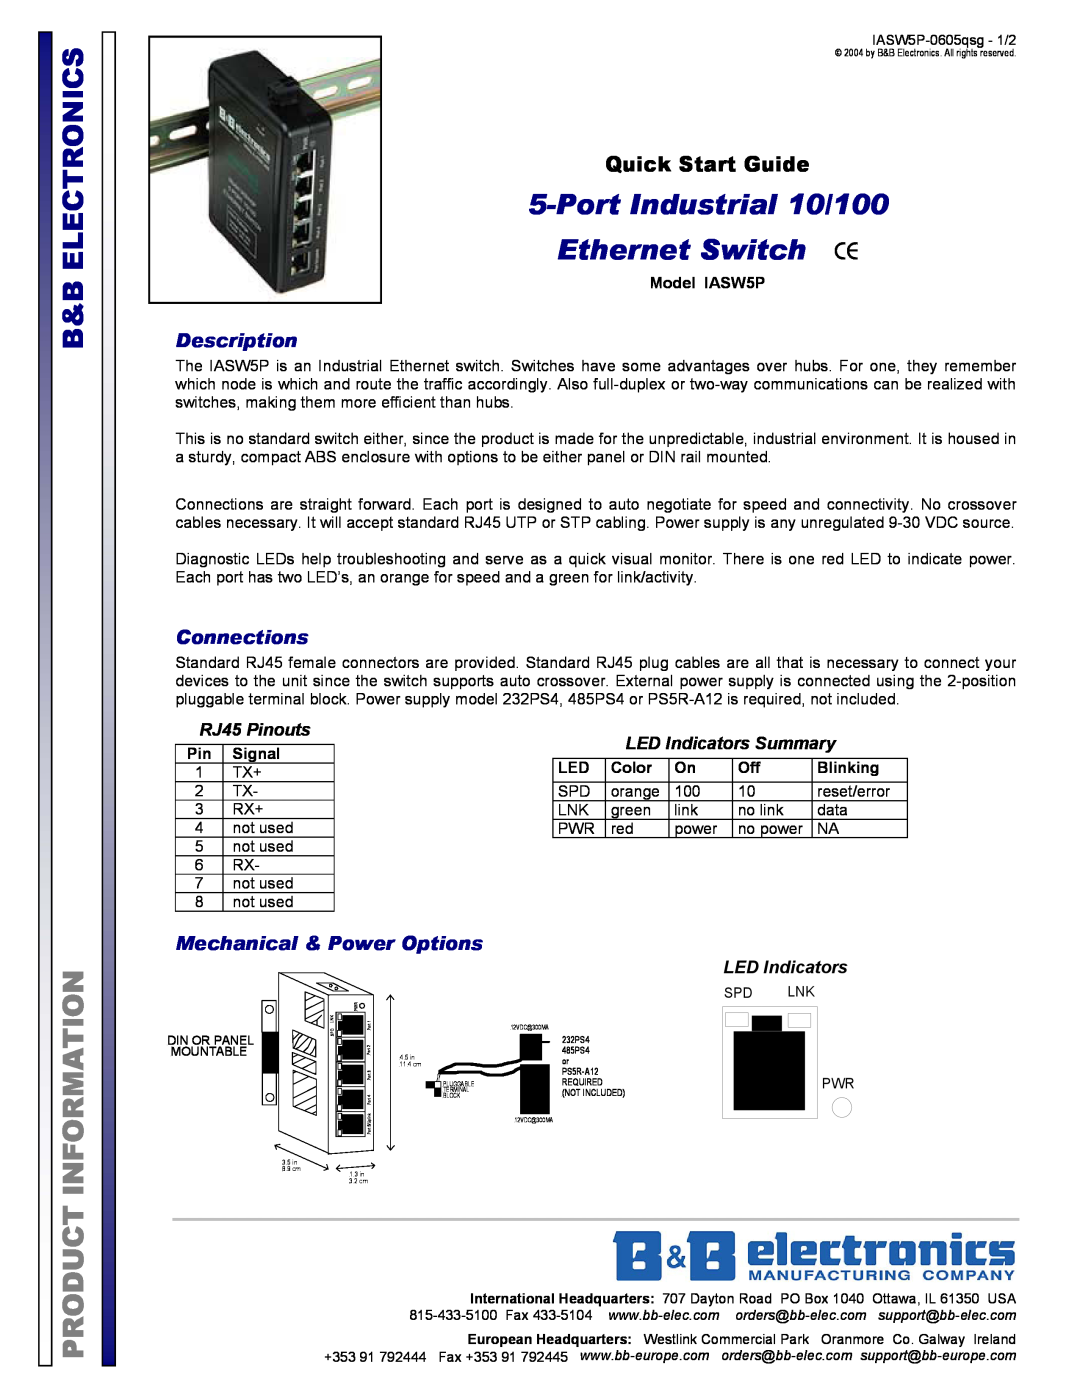 B&B Electronics IASW5P quick start B&B Electronics, Description, Connections, Mechanical & Power Options, RJ45 Pinouts 